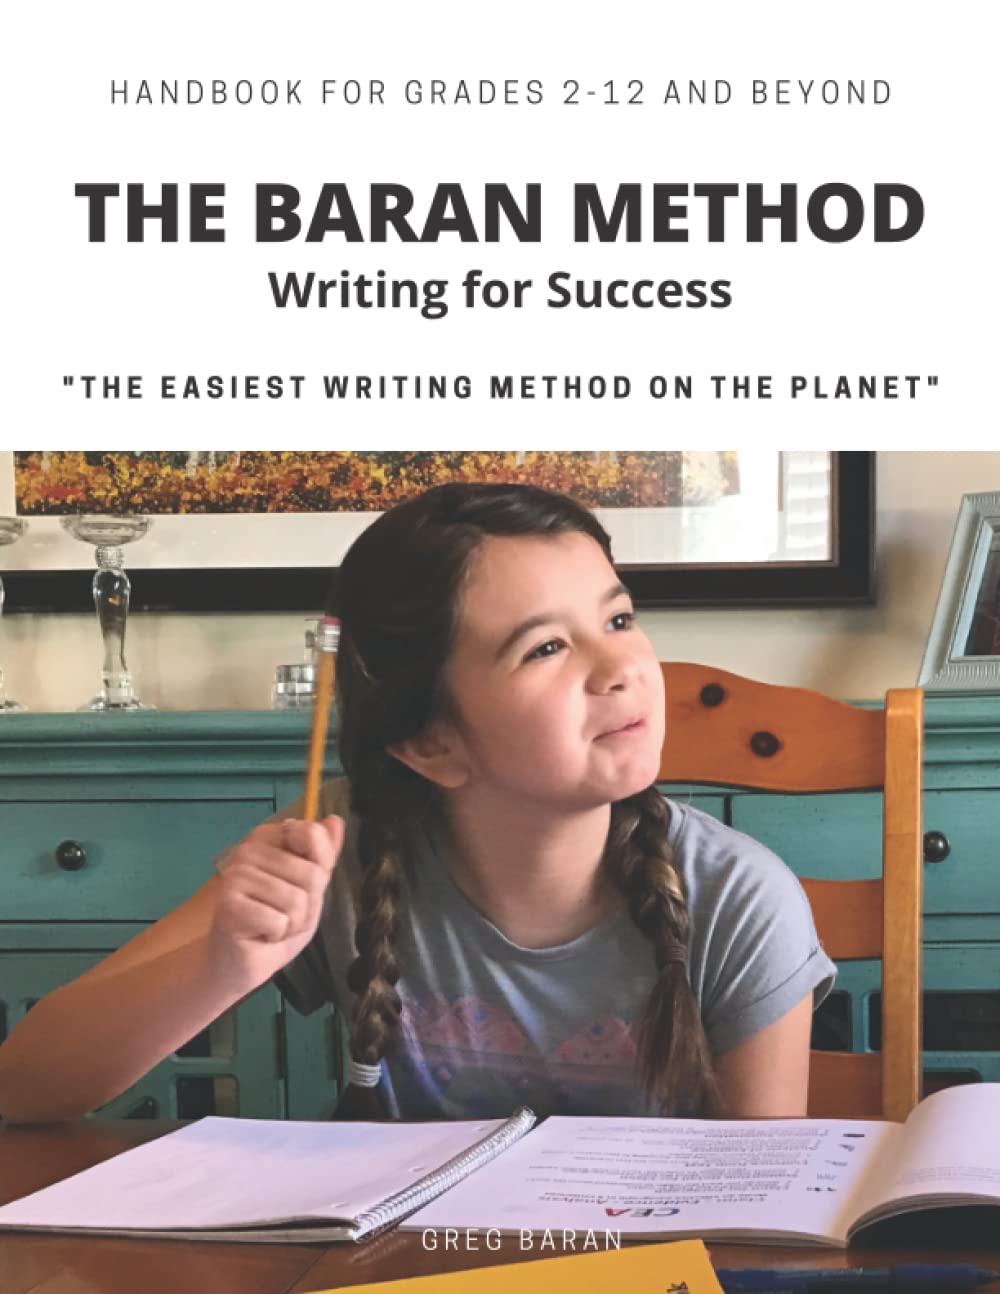 The Baran Method: Writing for Success